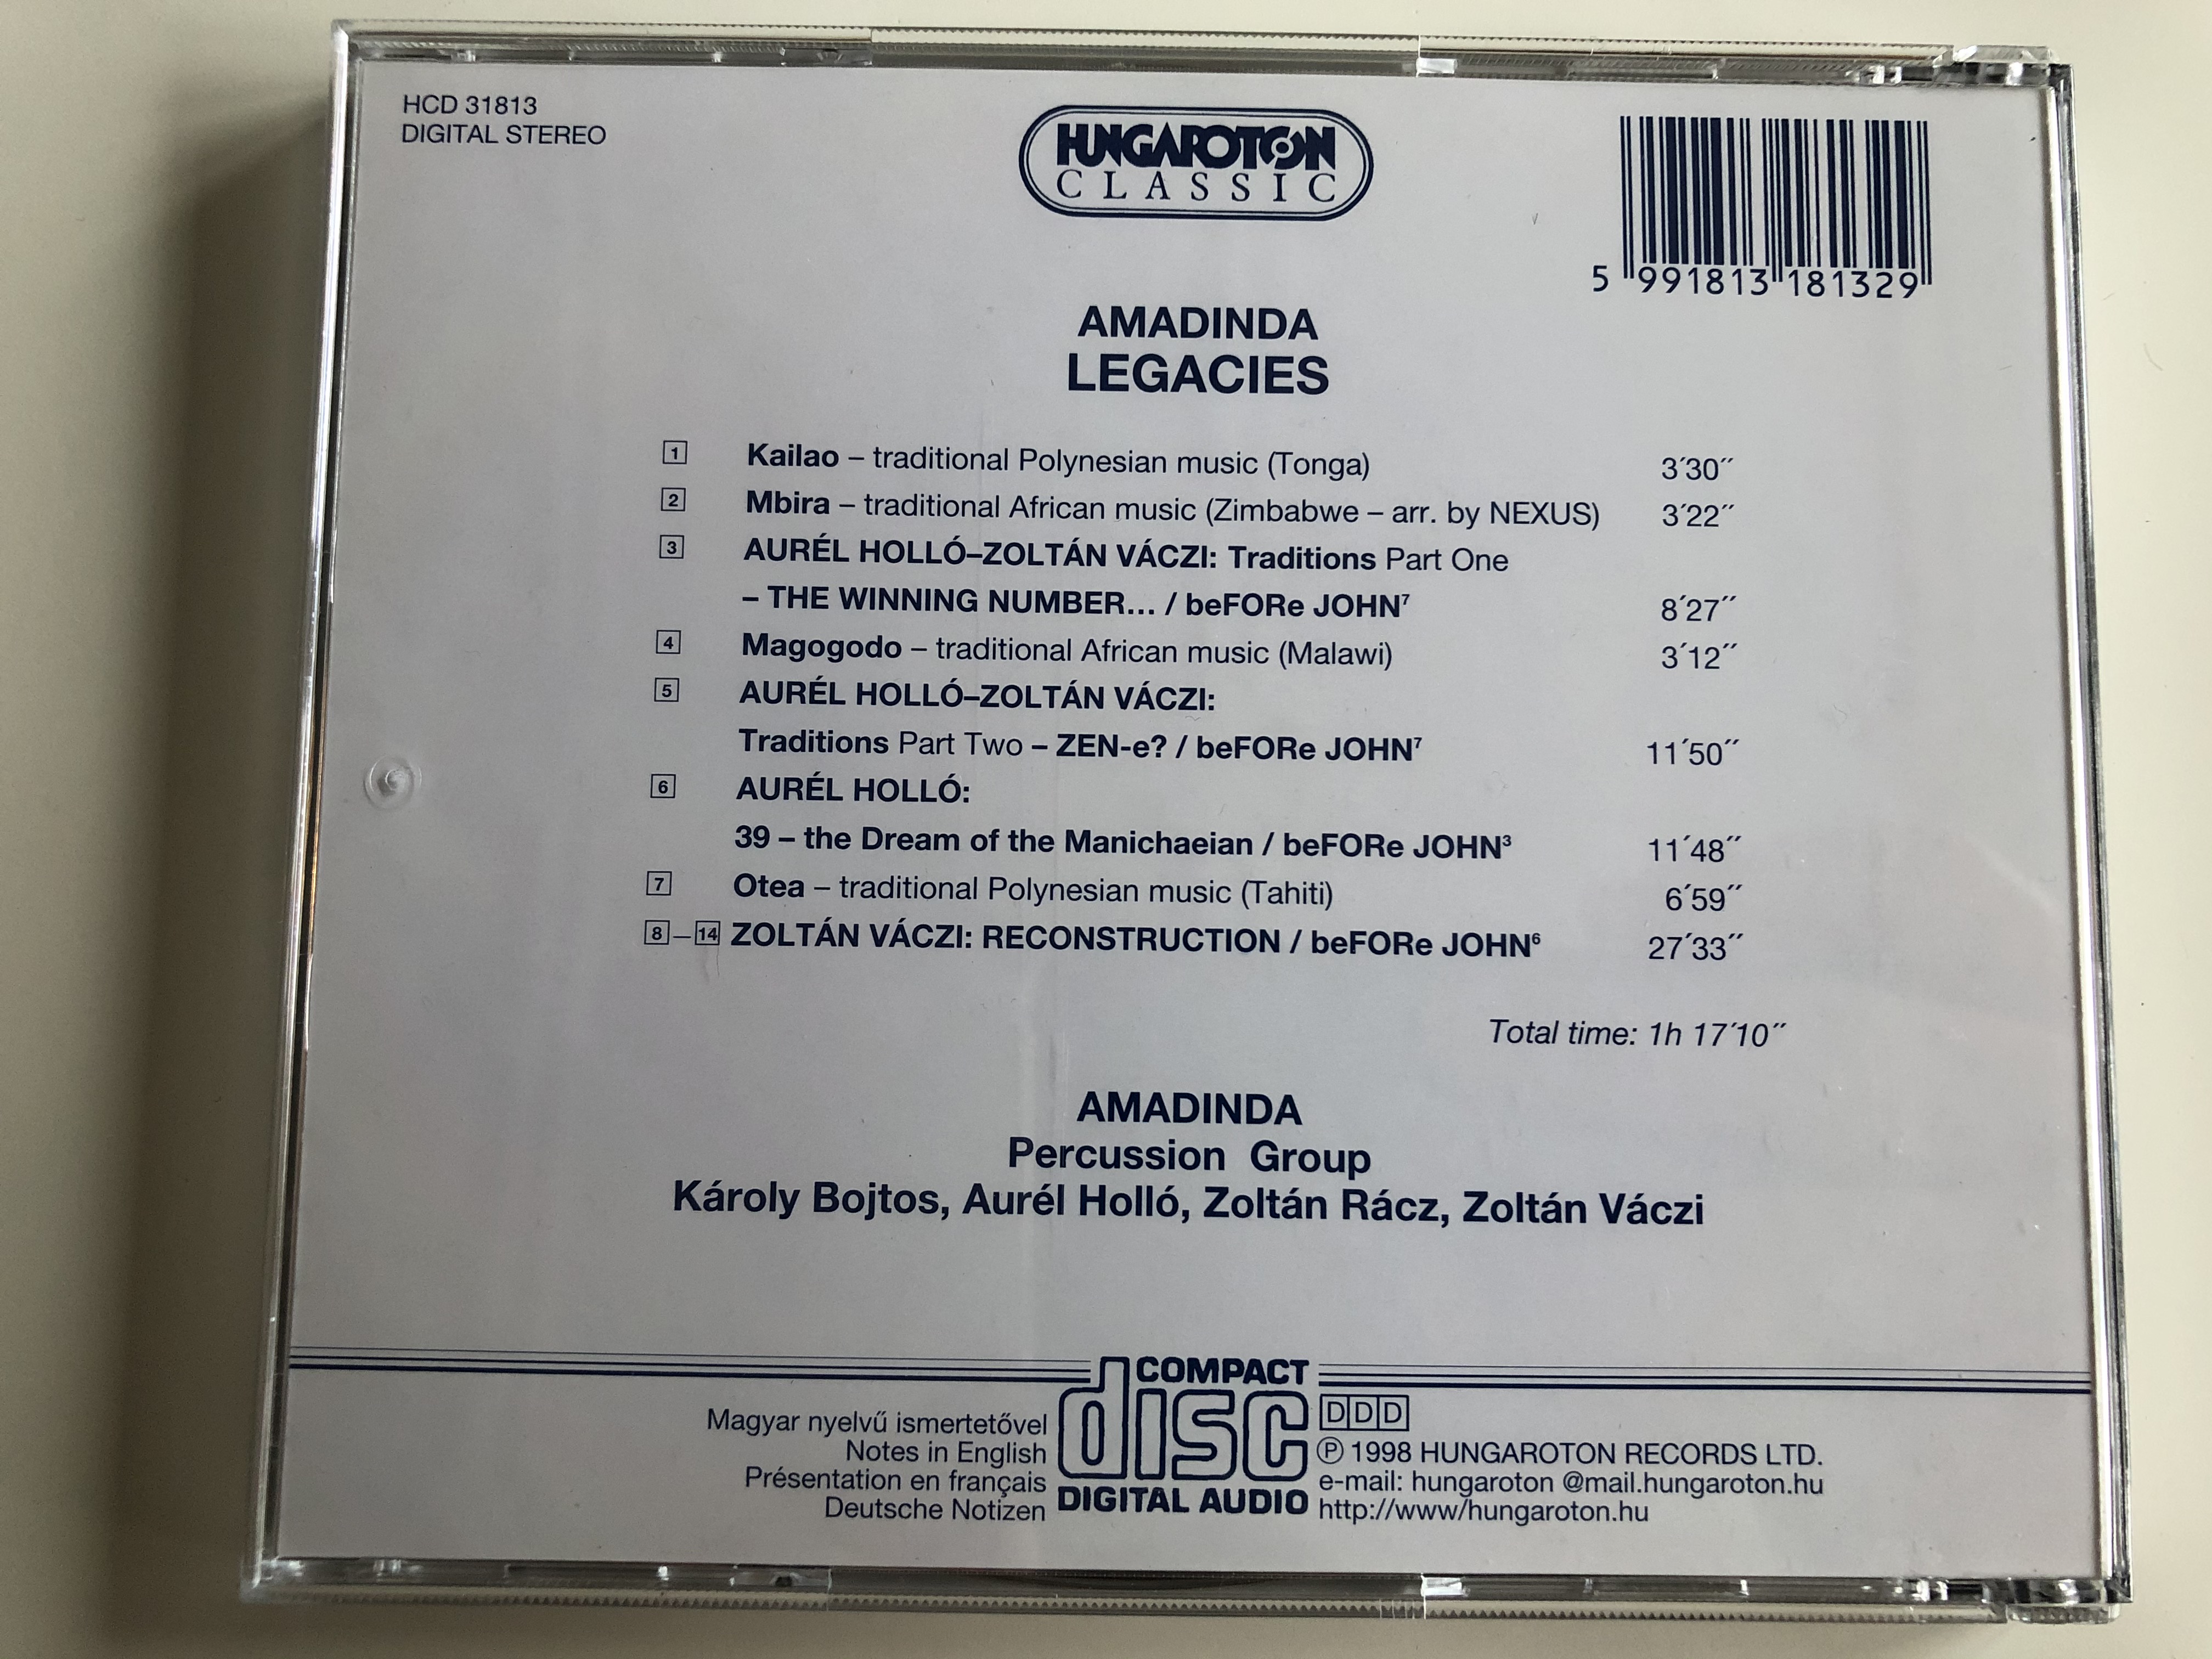 legacies-hagyom-nyok-amadinda-percussion-group-hungaroton-classic-audio-cd-1998-stereo-hcd-31813-14-.jpg